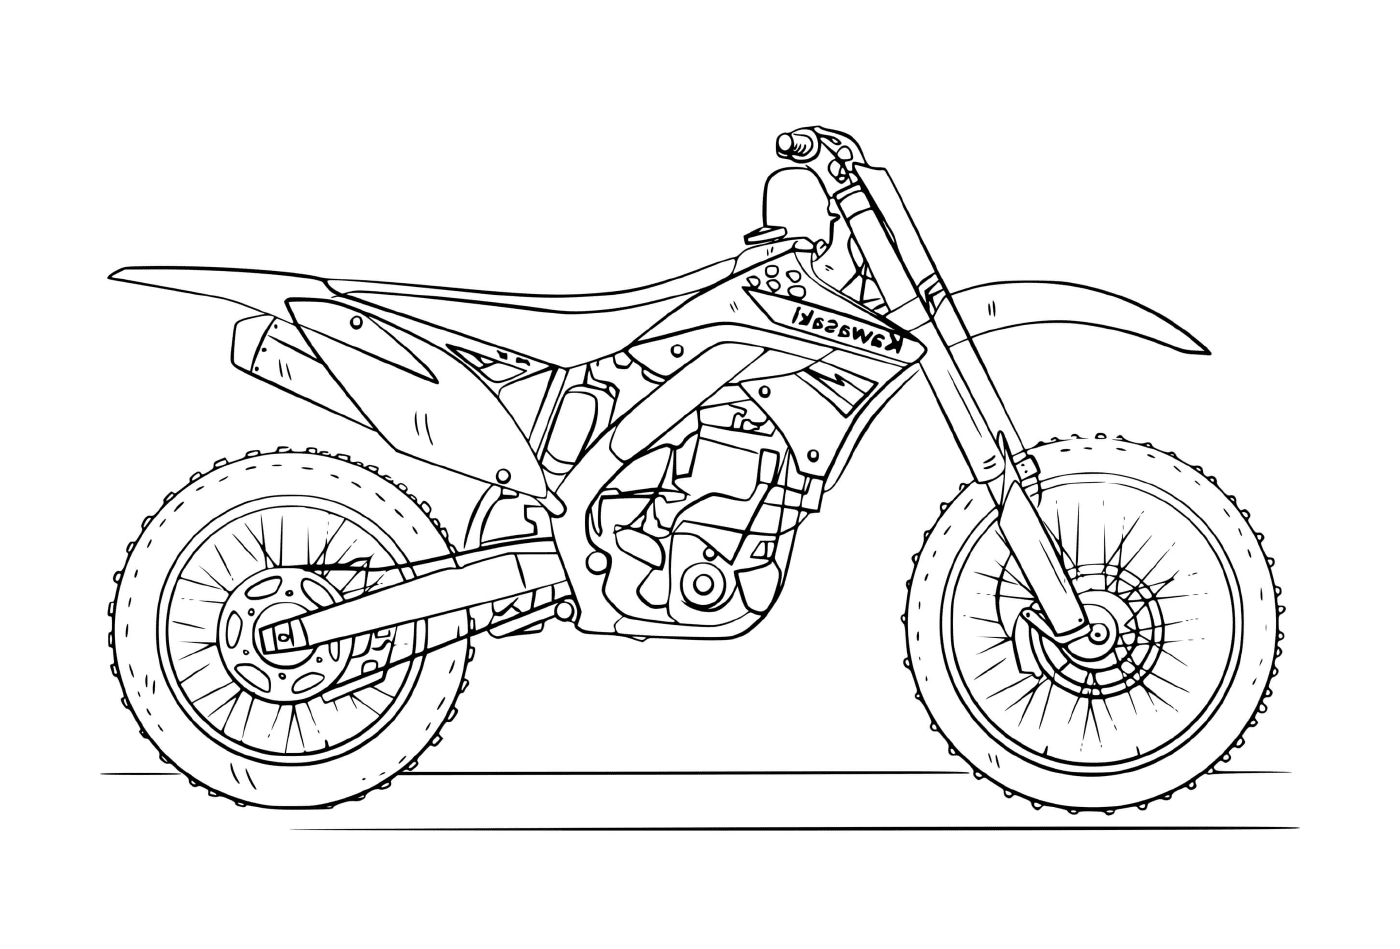  Moto croce Kawasaki a riposo 